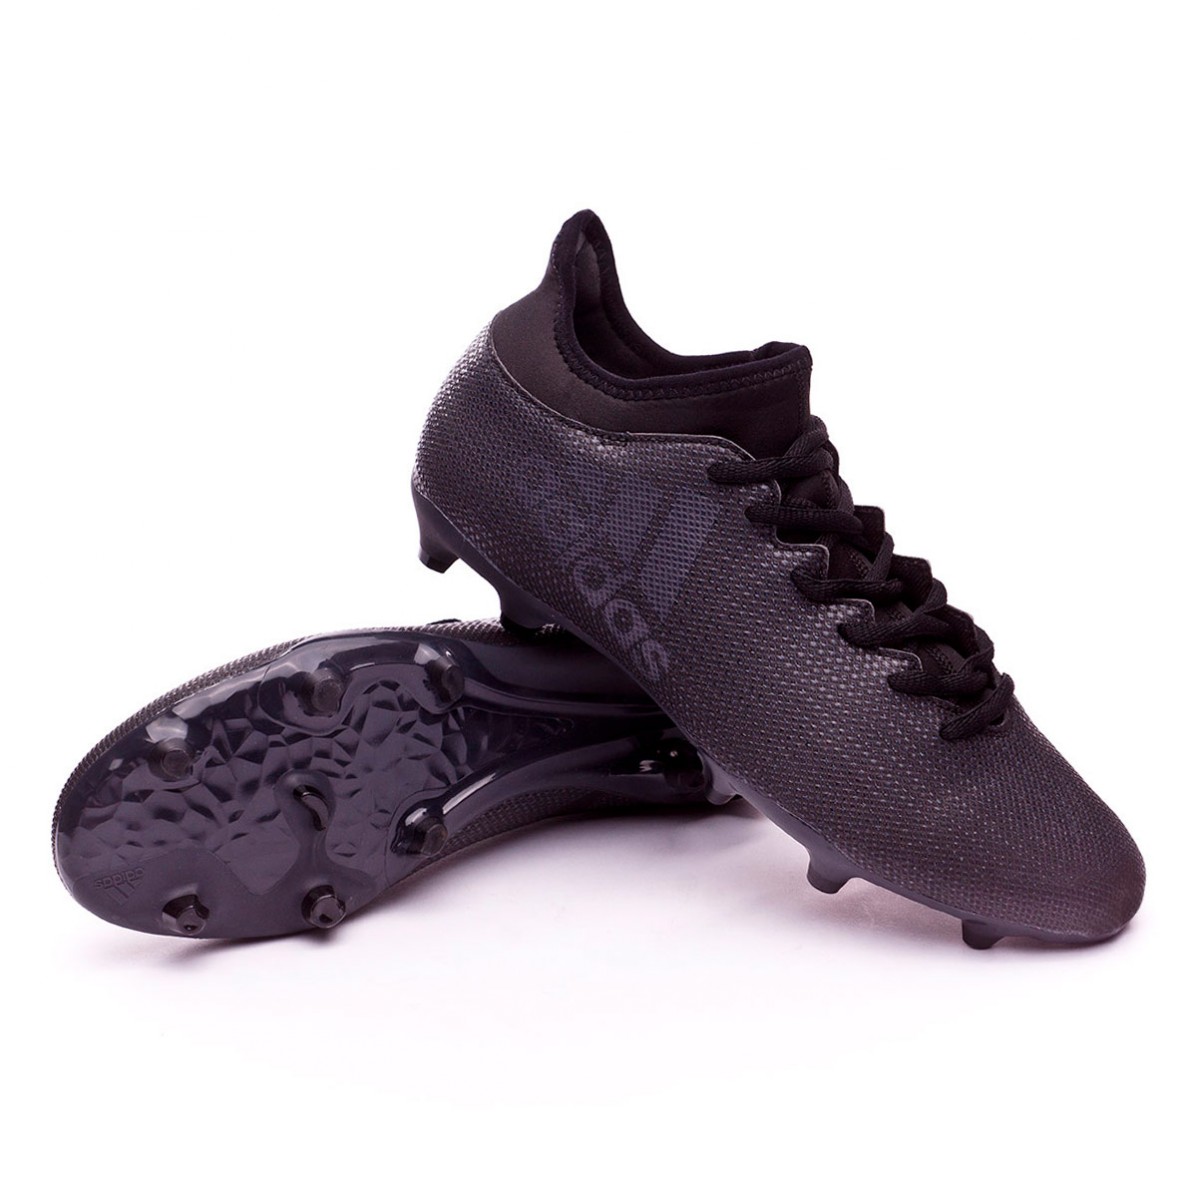 Boot Adidas X 17 3 Fg Core Black Super Cyan Leaked Soccer